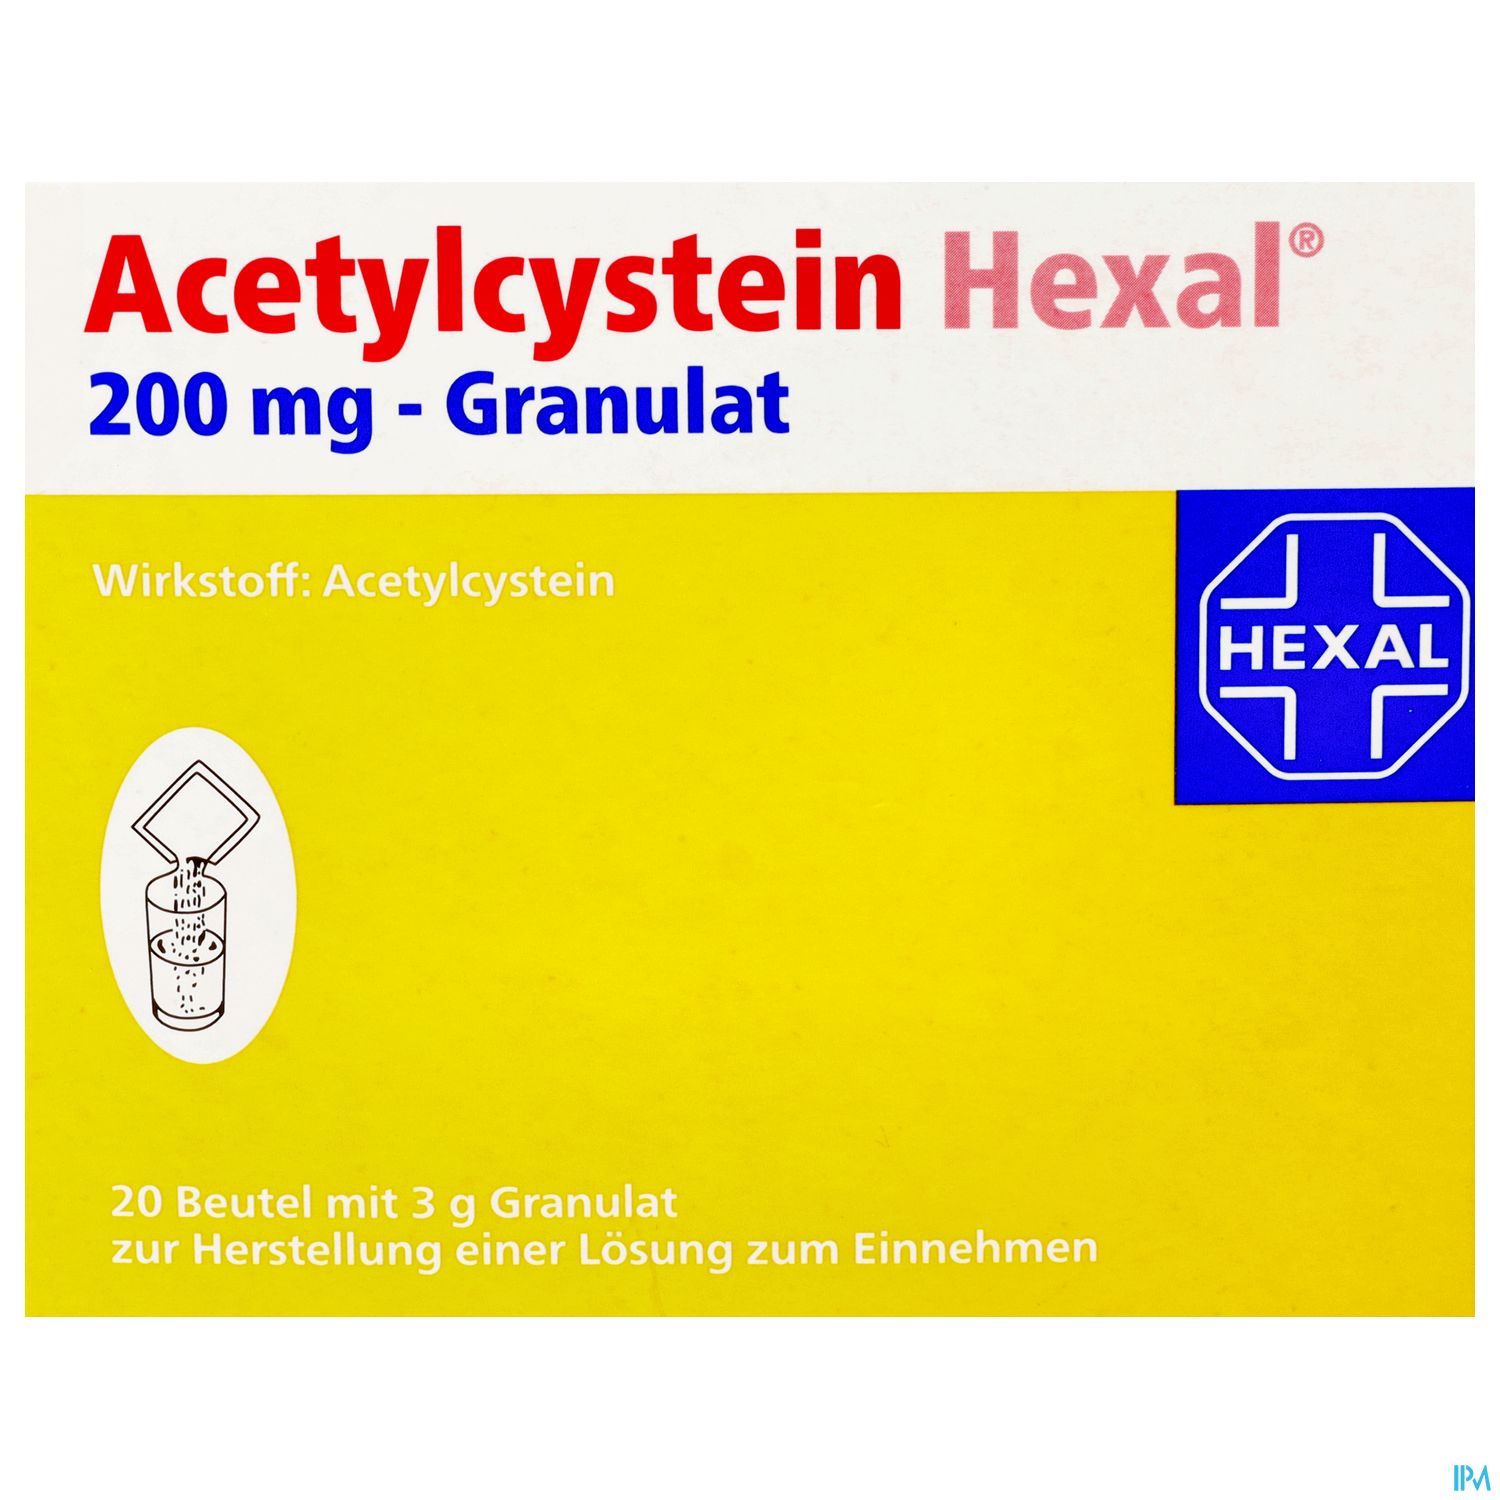 Acetylcystein Hexal 200 mg - Granulat